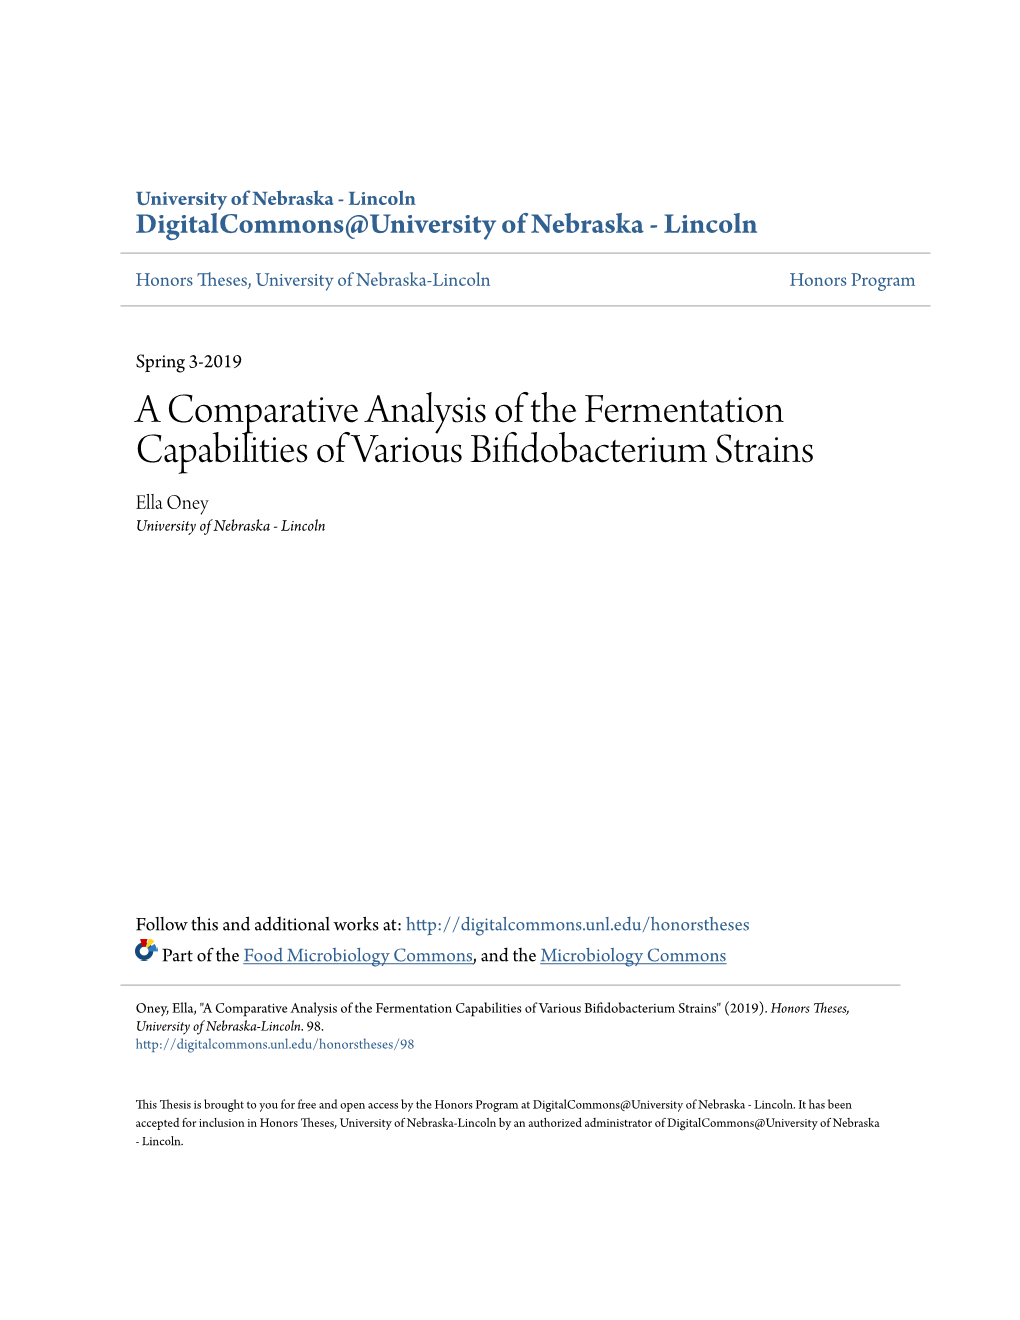 A Comparative Analysis of the Fermentation Capabilities of Various Bifidobacterium Strains Ella Oney University of Nebraska - Lincoln